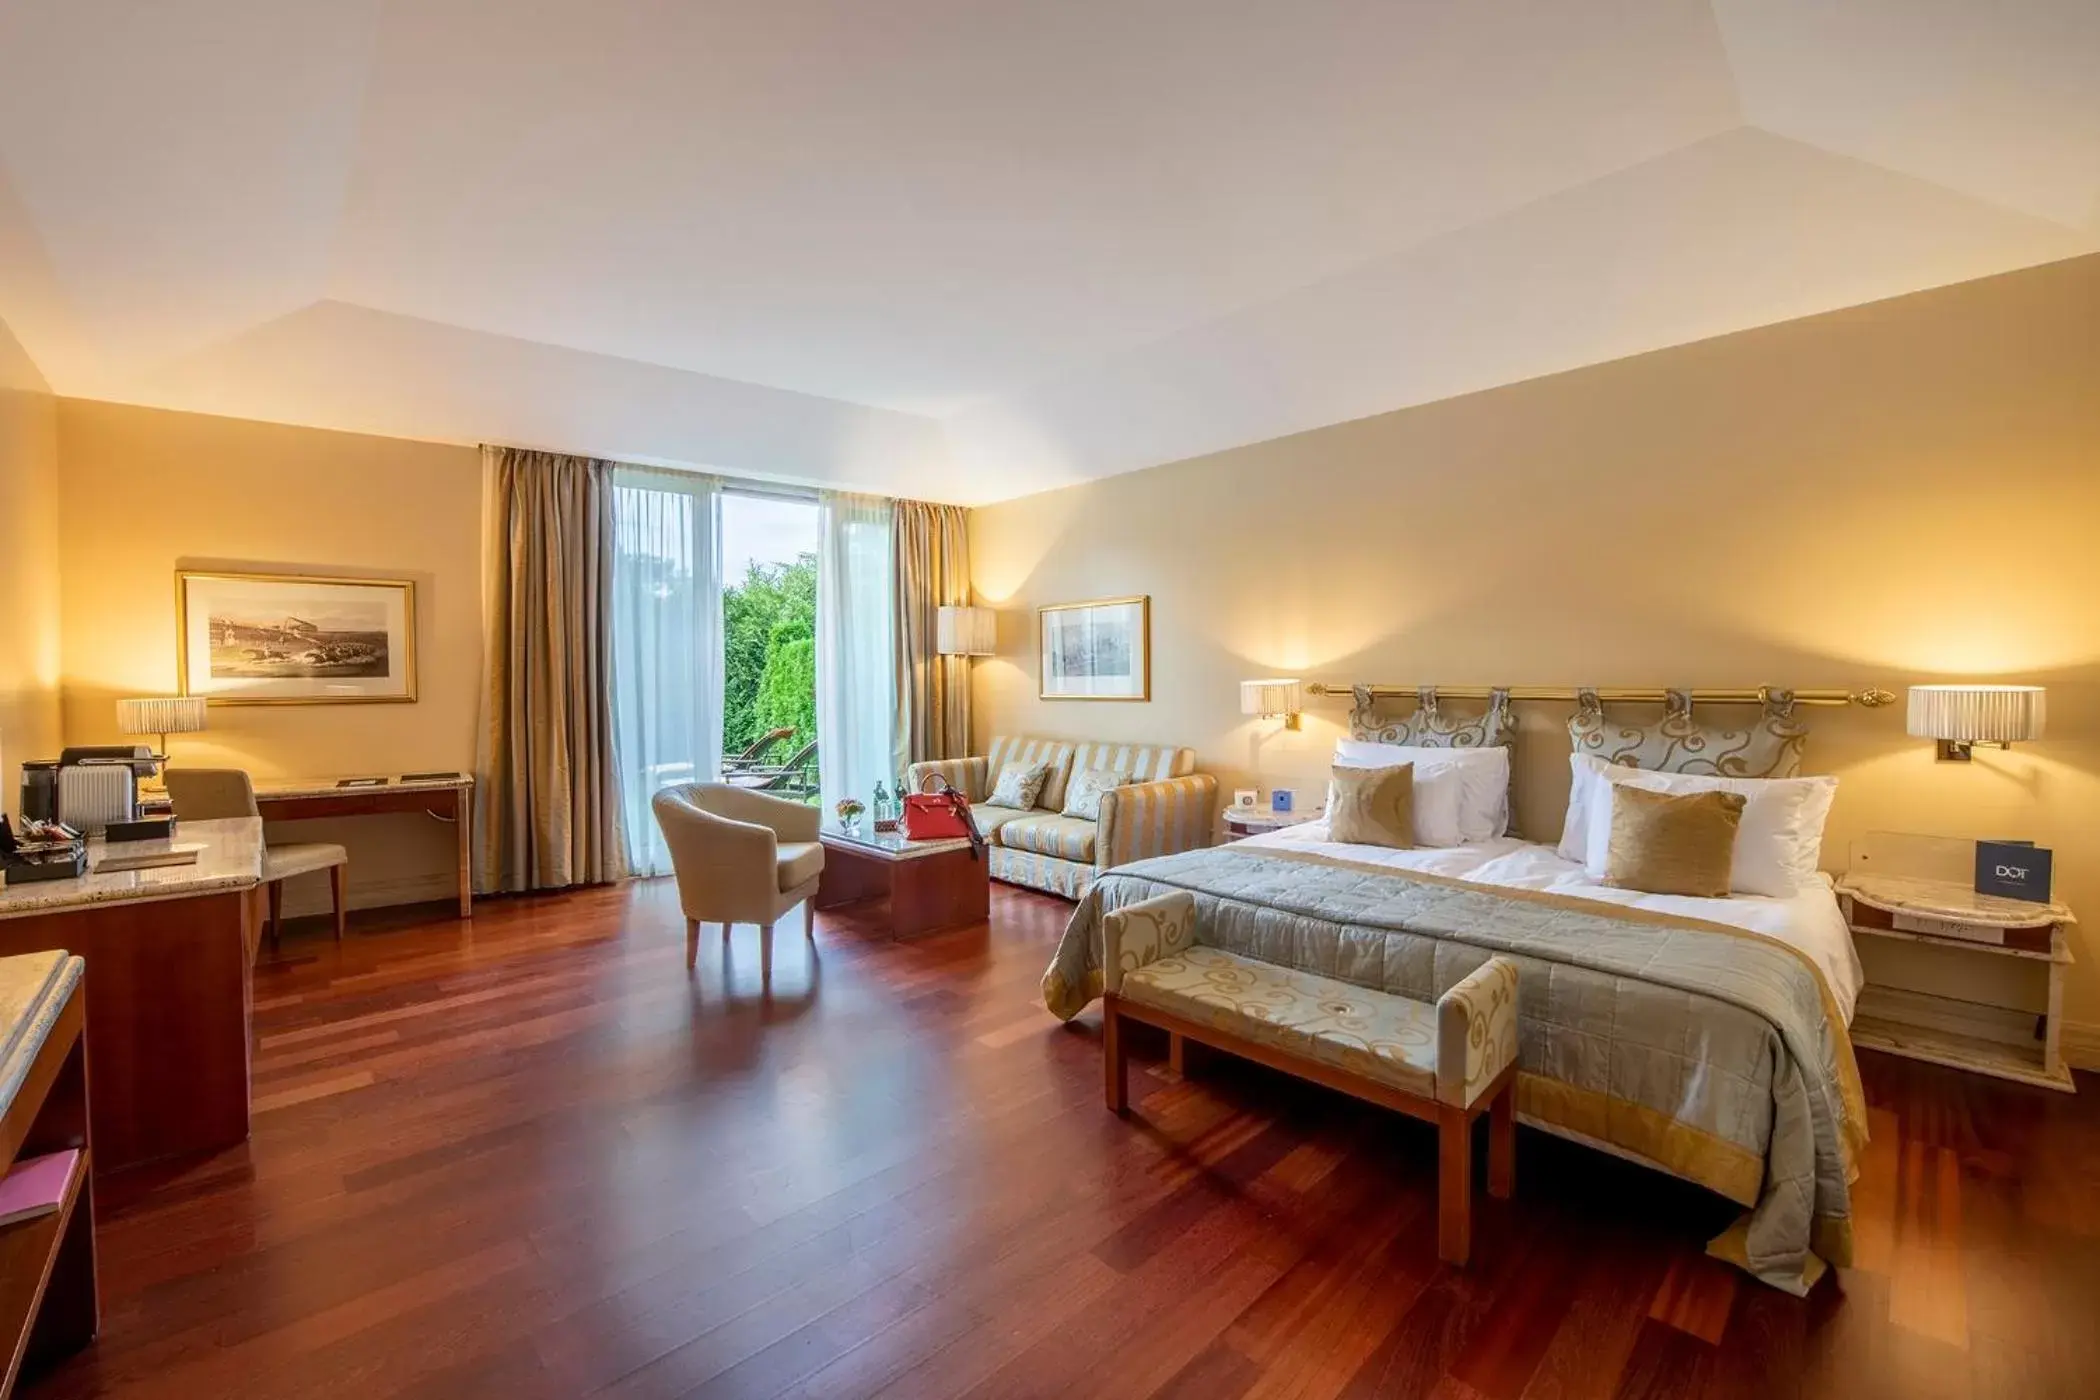 Bedroom in Villa Principe Leopoldo - Ticino Hotels Group